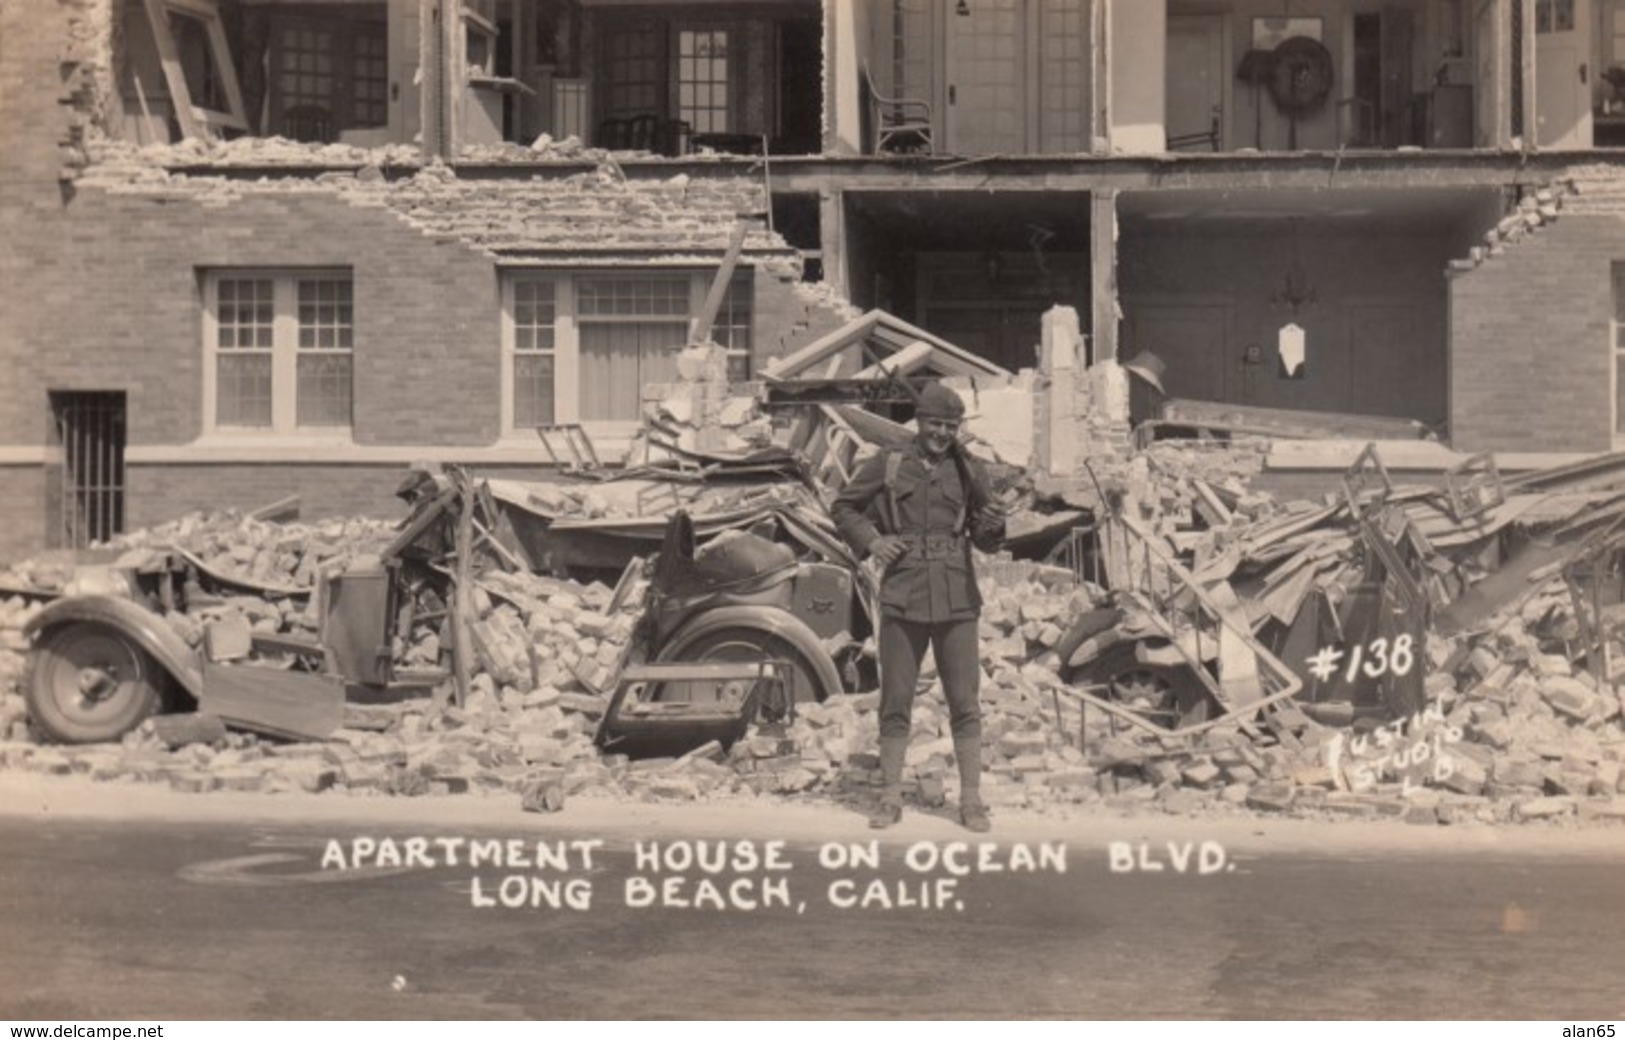 Long Beach California, 1933 Earthquake Damage Apartment Auto, Soldier Ocean Blvd., C1930s Vintage Real Photo Postcard - Long Beach